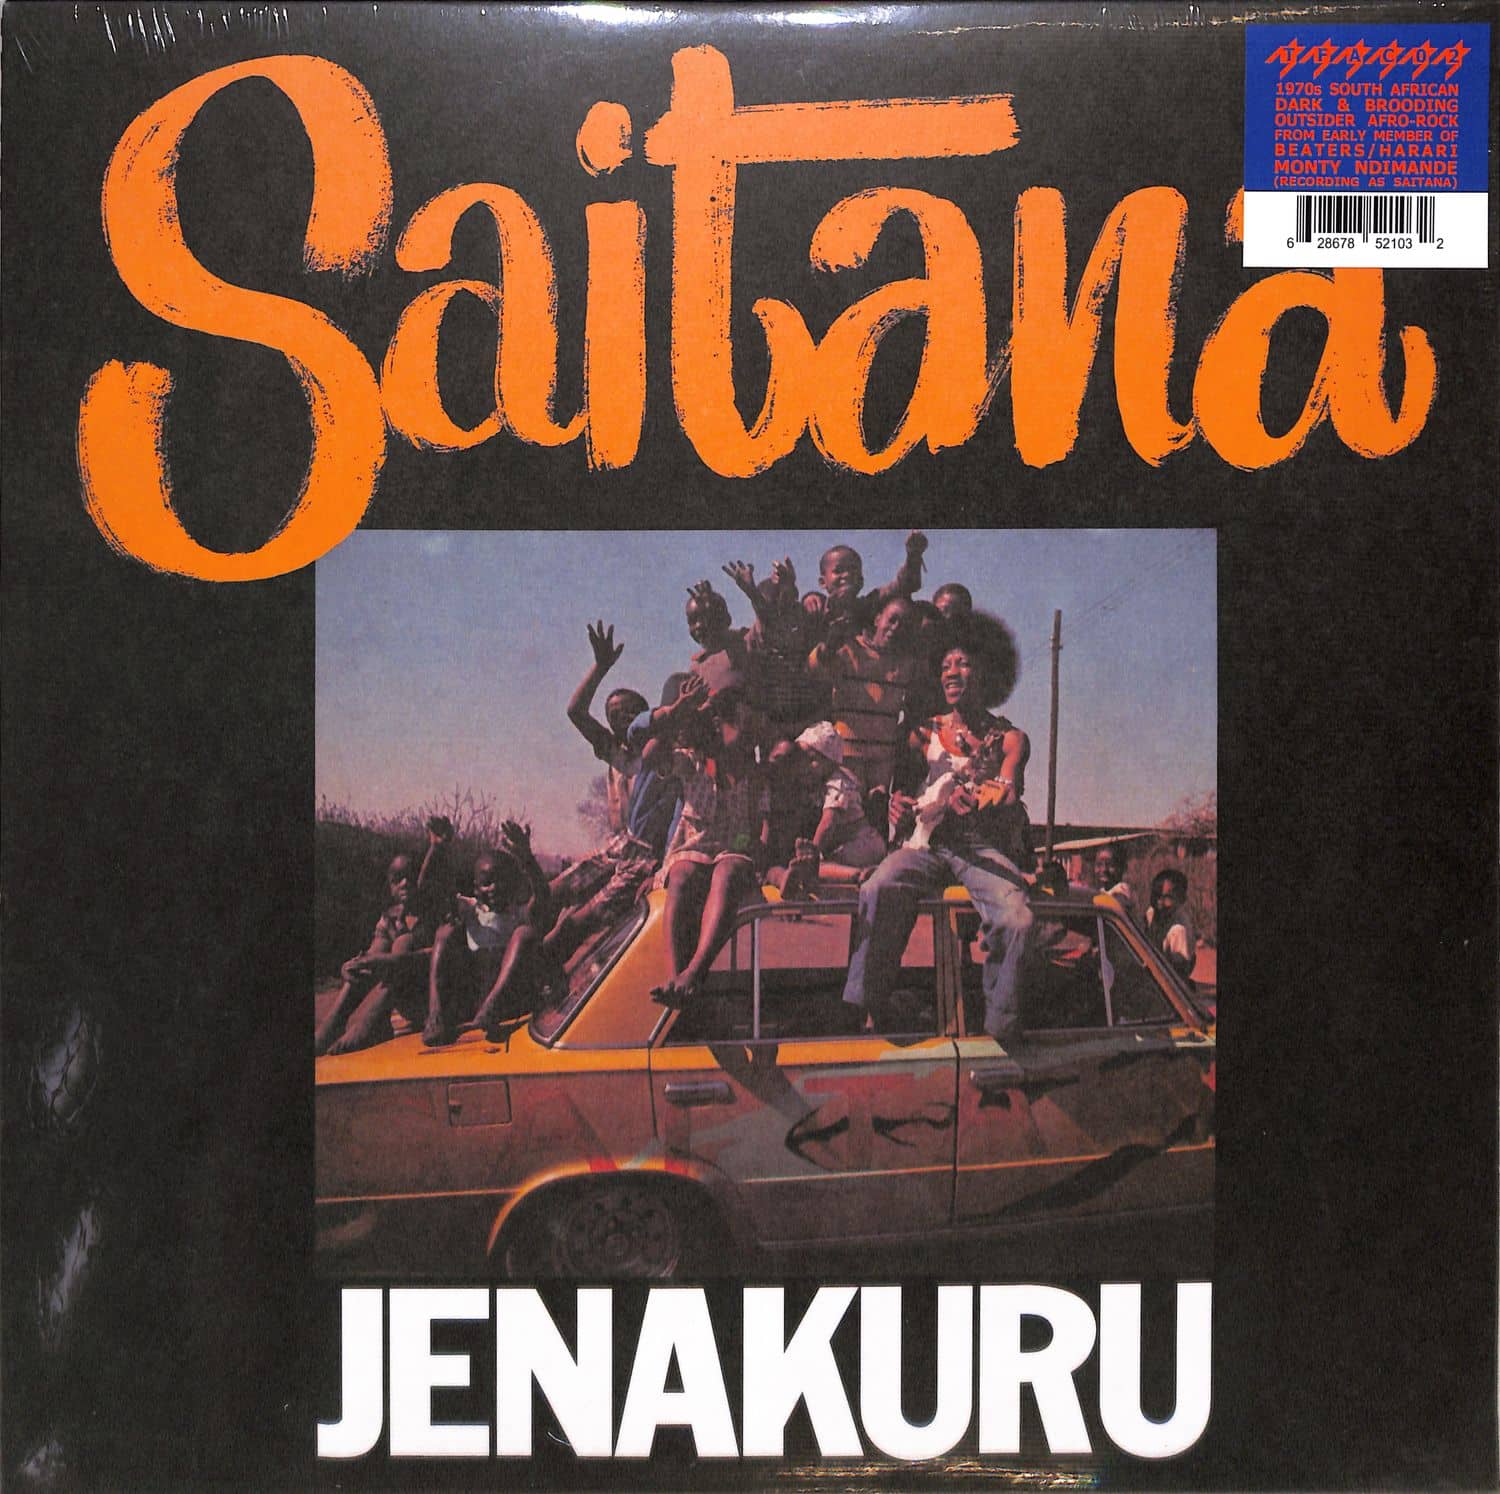 Saitana - JENAKURU